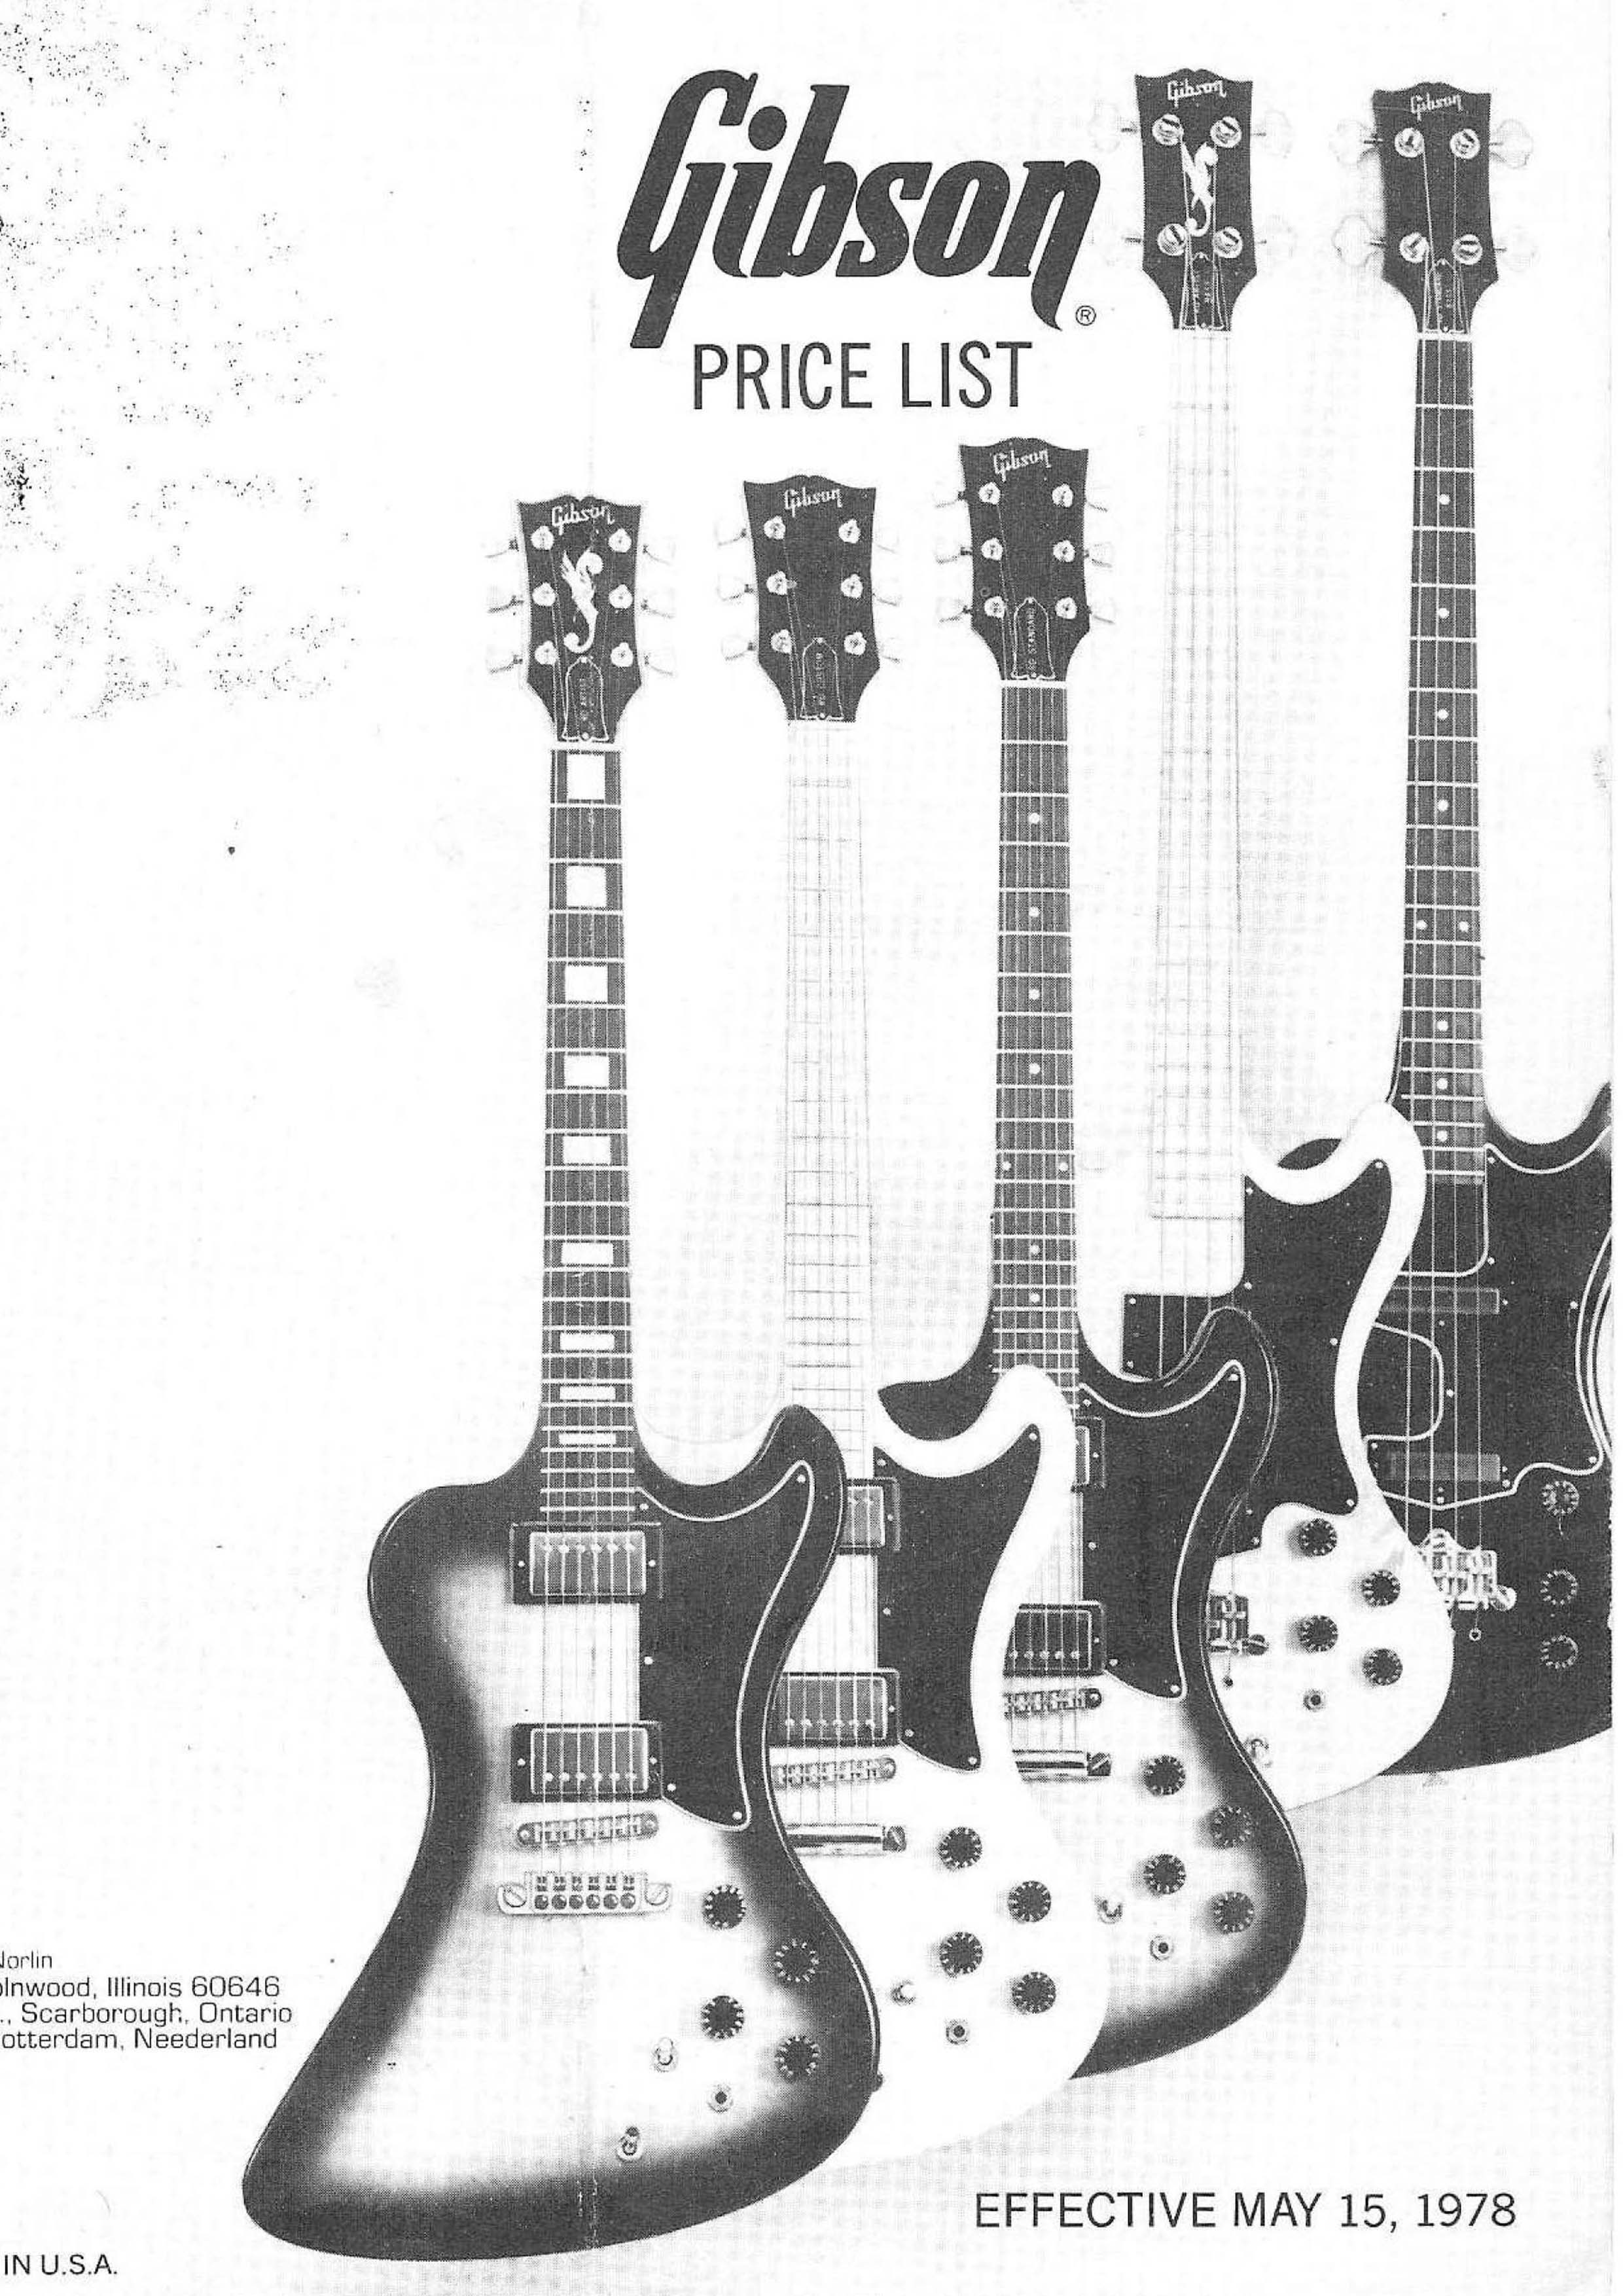 Gibson Price List 1978